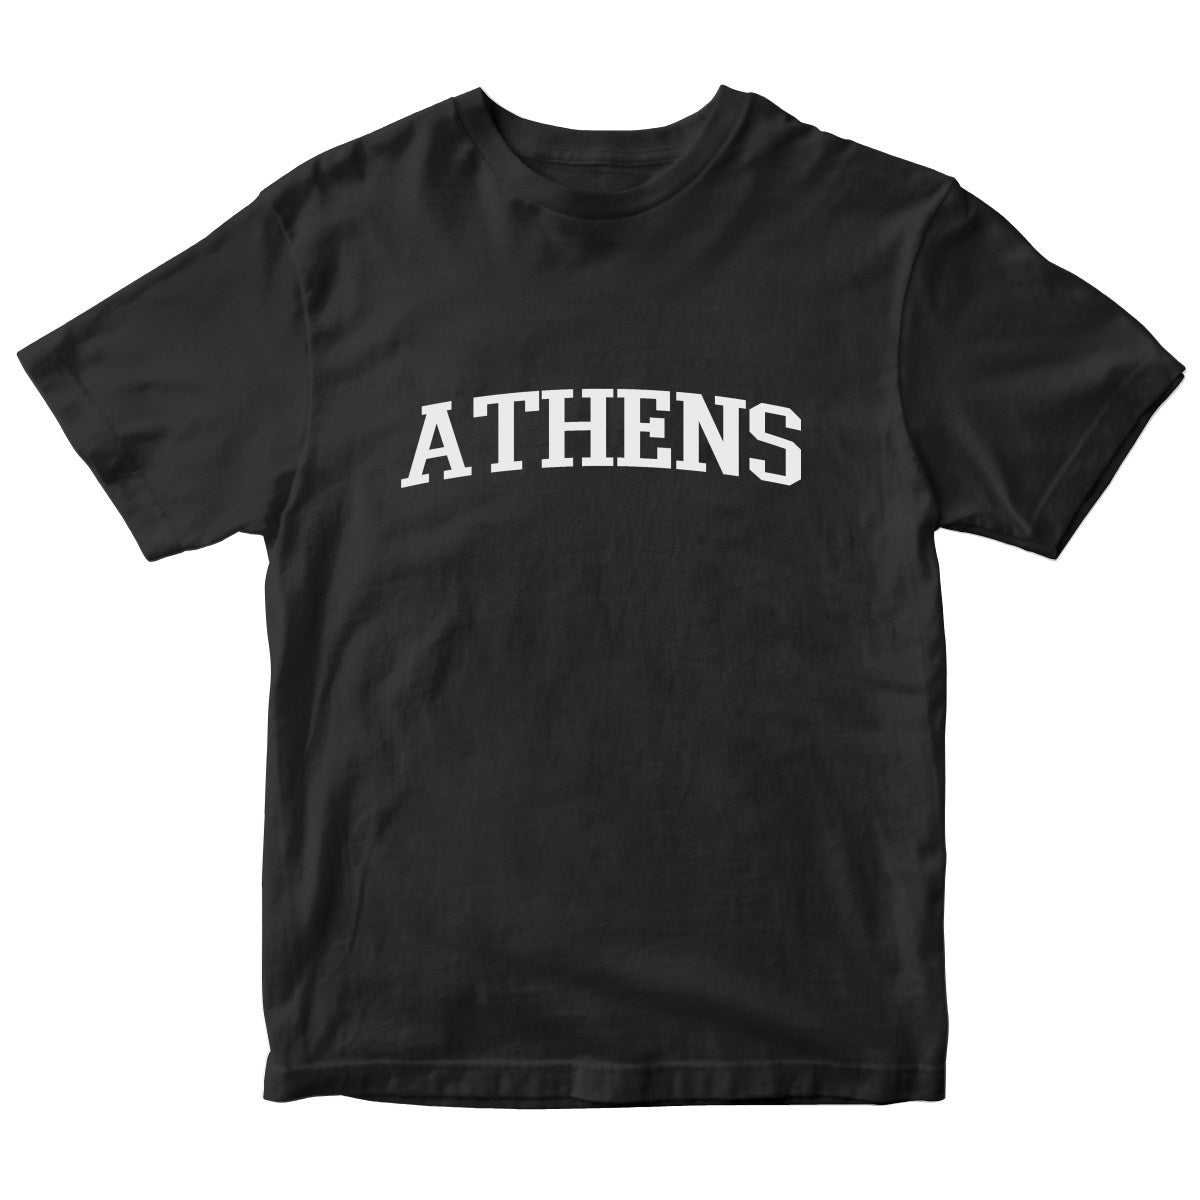 Athens Kids T-shirt